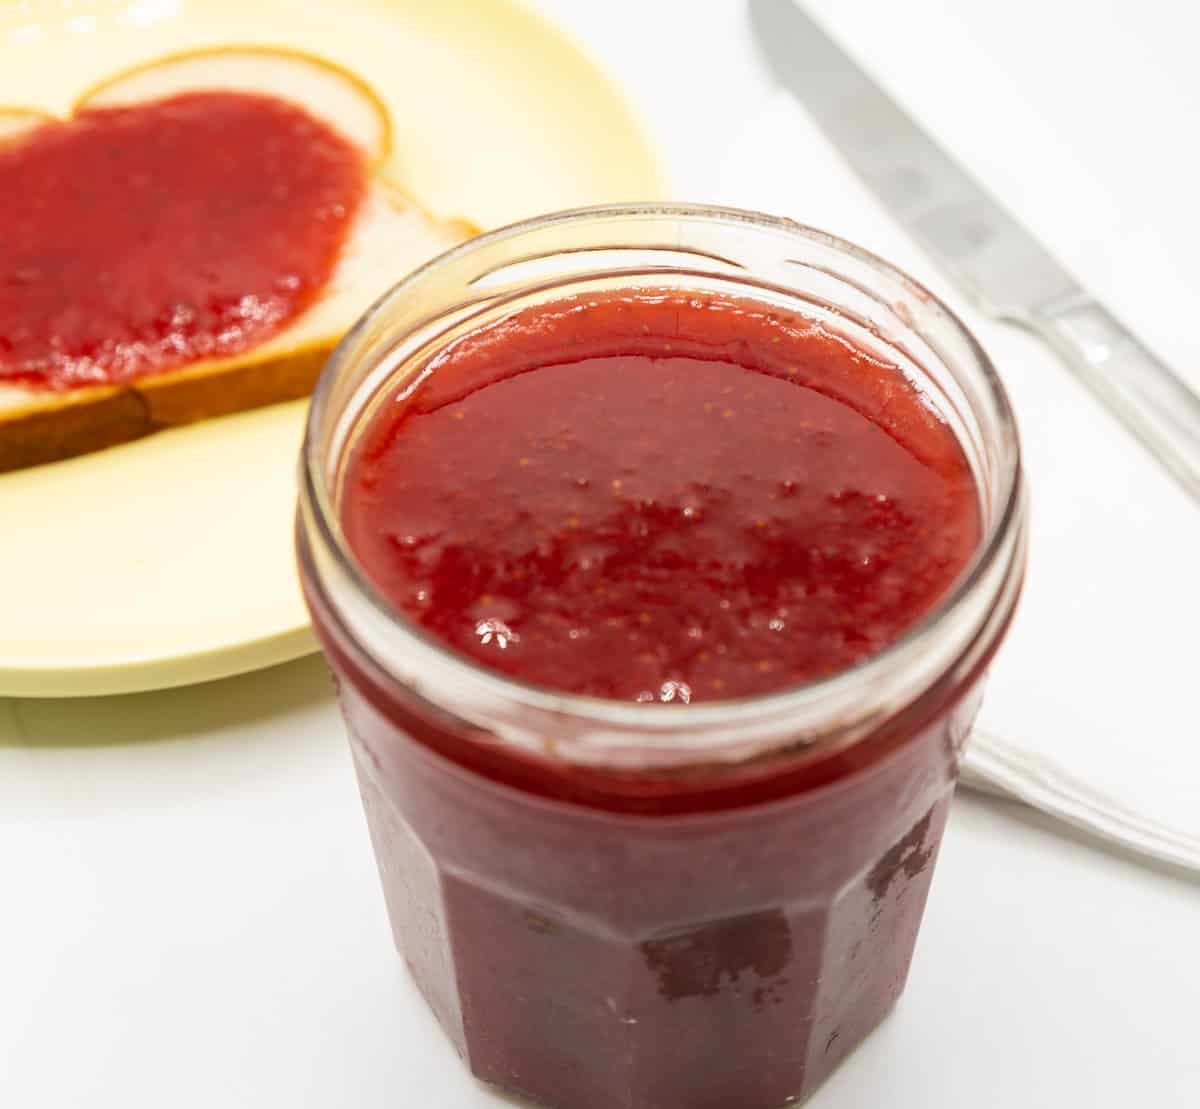 Strawberry jam in a jam jar.